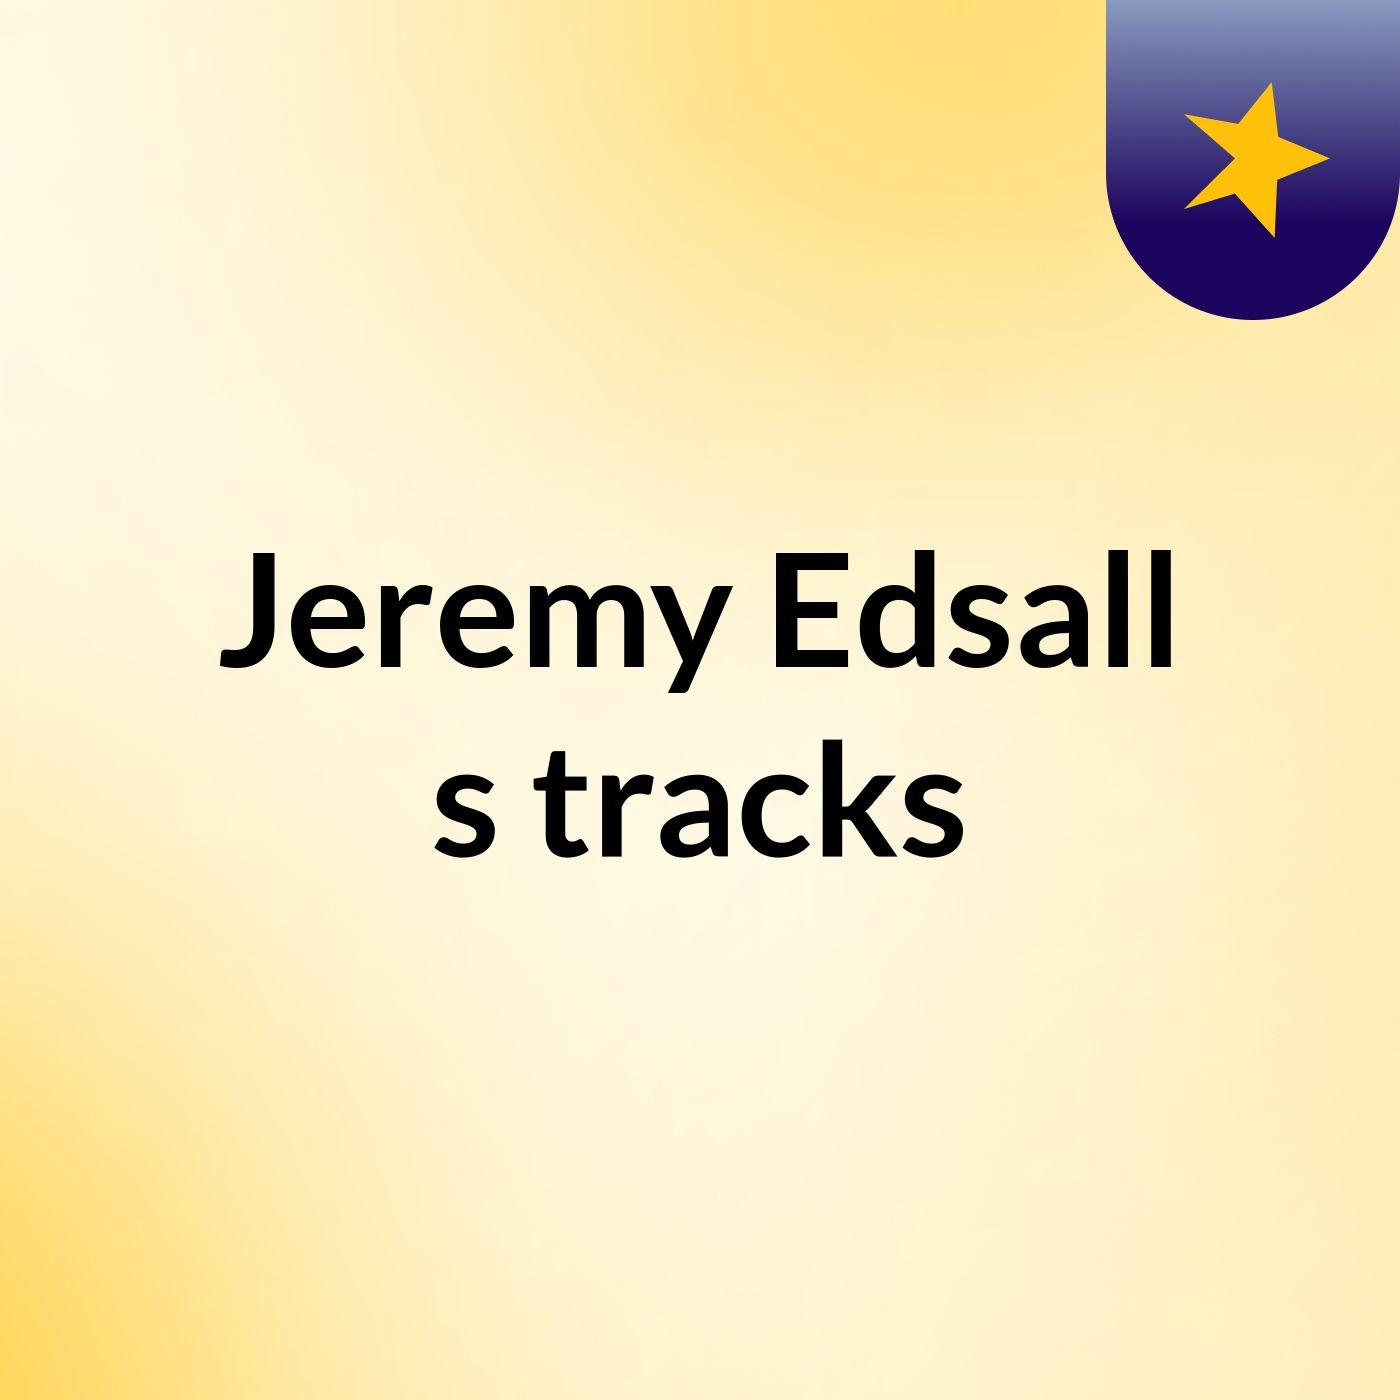 Jeremy Edsall's tracks